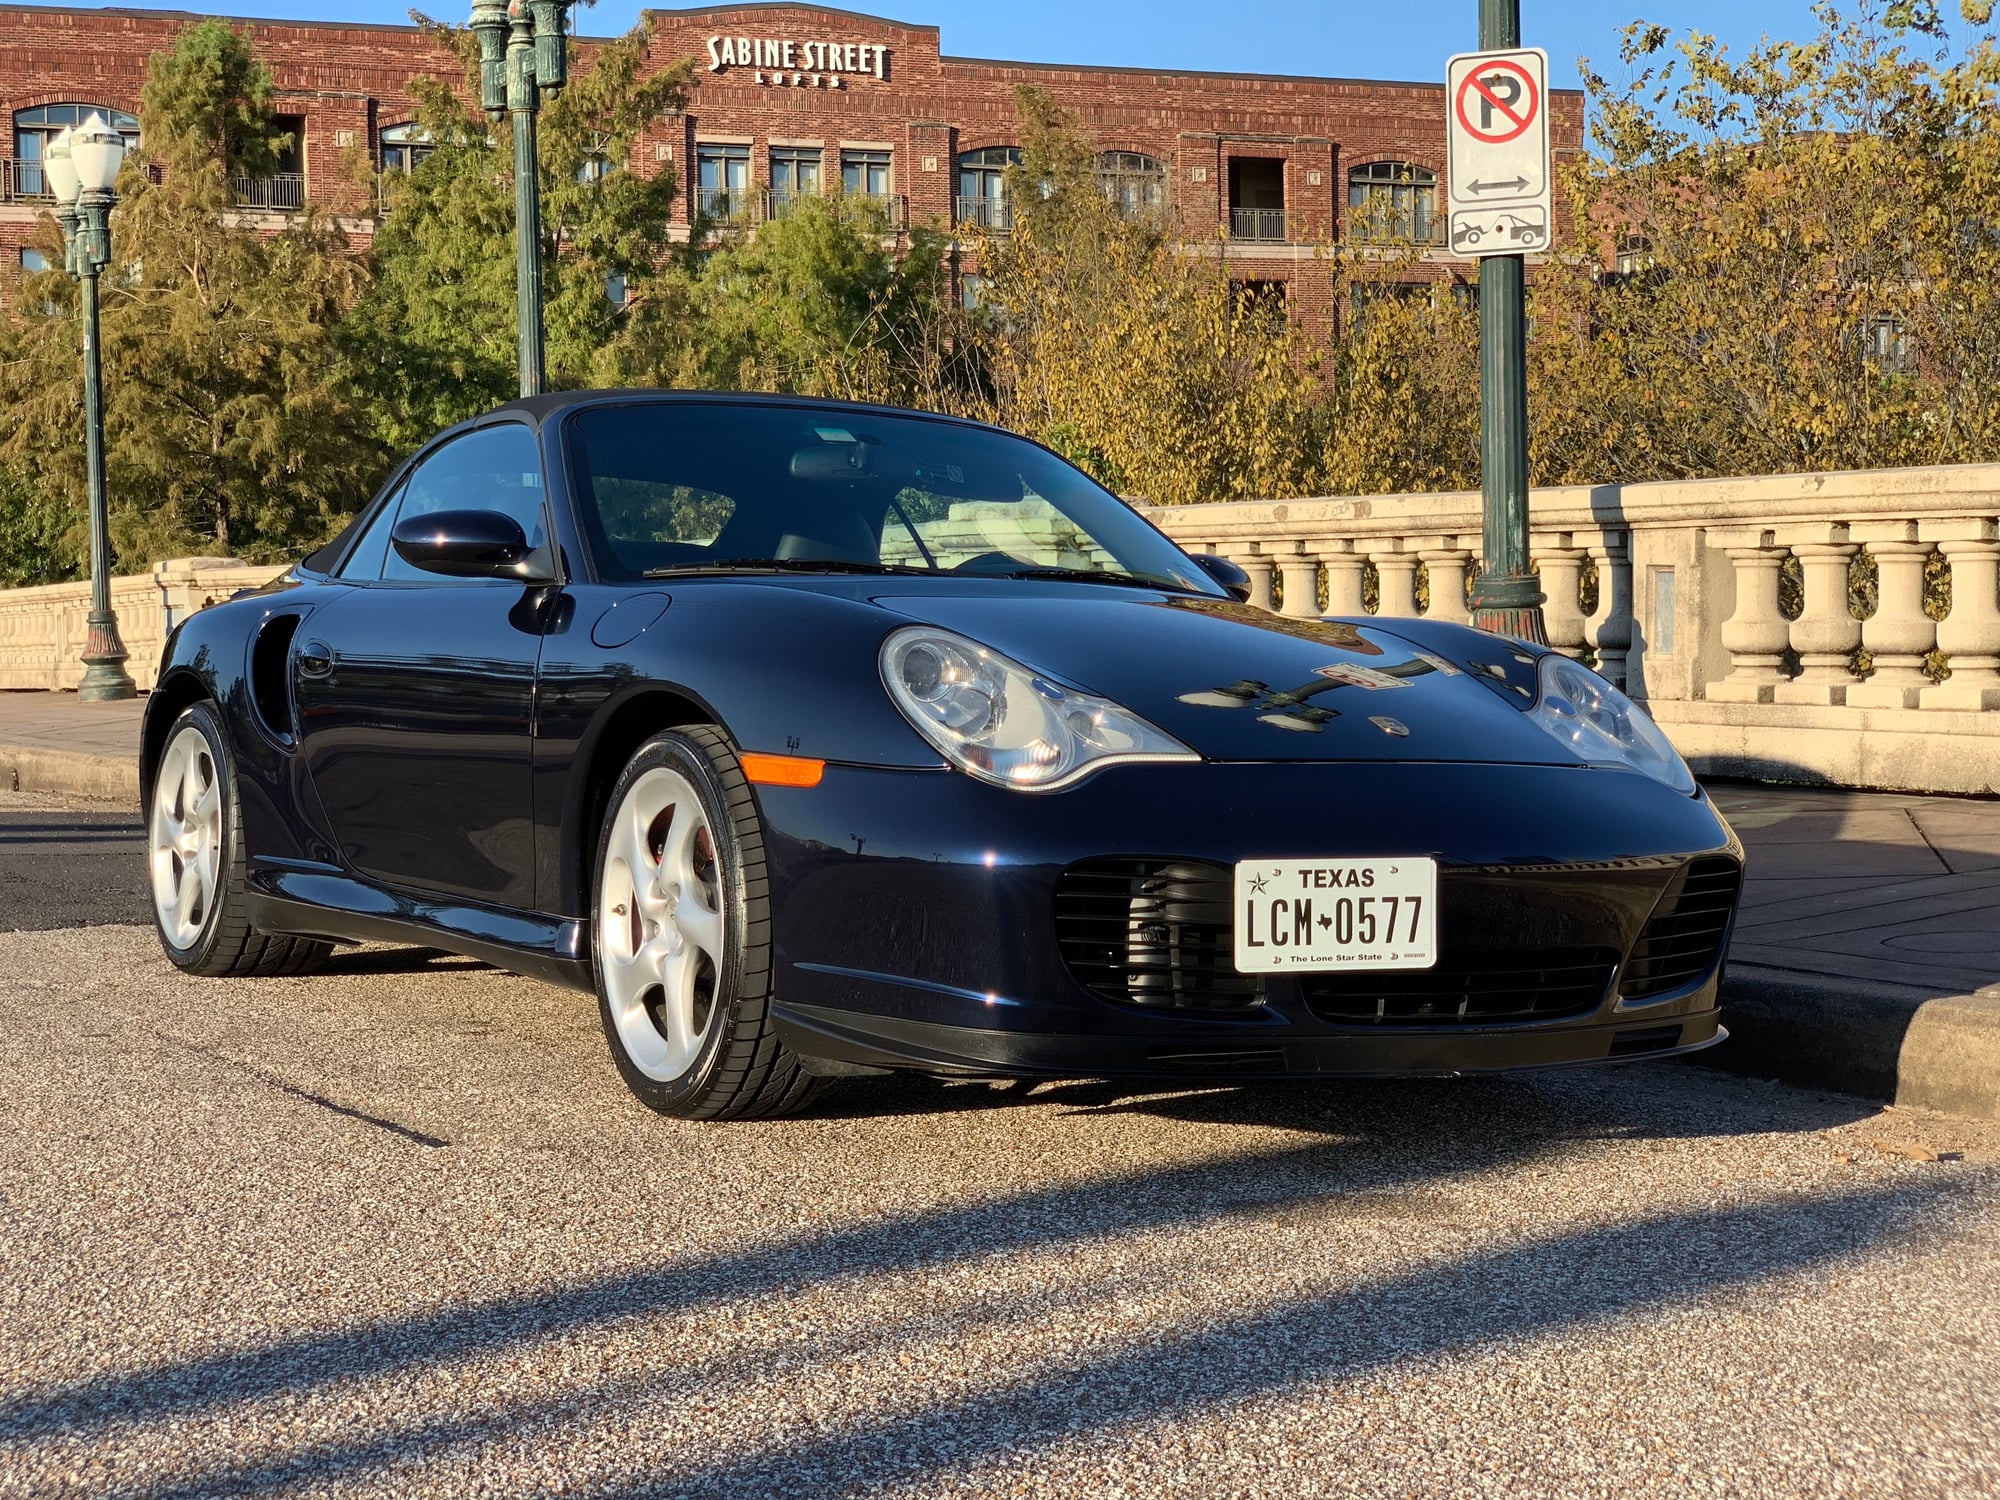 2004 Porsche 911 - 2004 Porsche 911 Turbo (996TT) - Used - VIN WP0CB29964S676435 - 58,500 Miles - 6 cyl - AWD - Manual - Convertible - Blue - Houston, TX 77007, United States